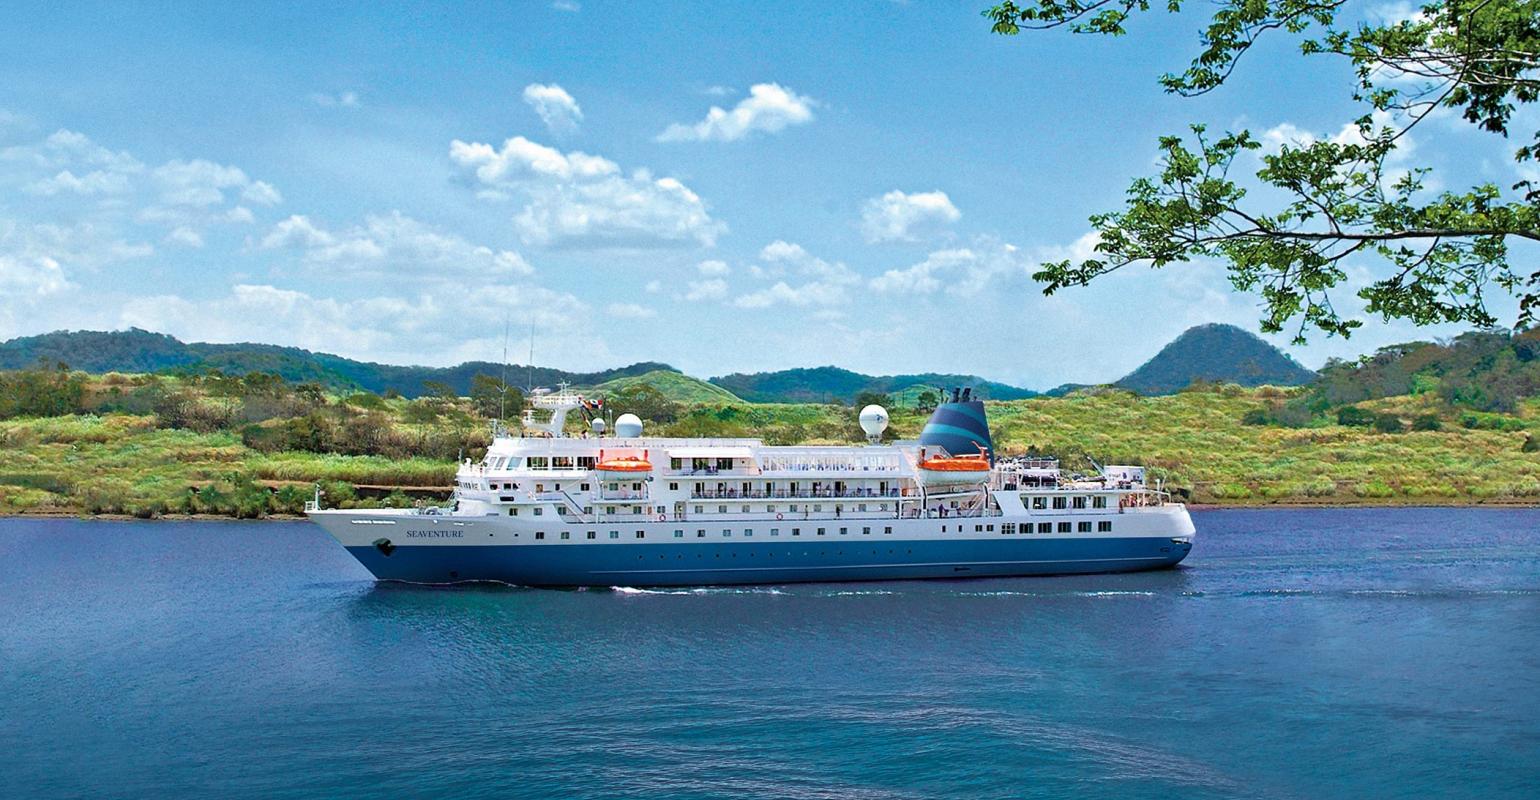 seaventure cruise ship